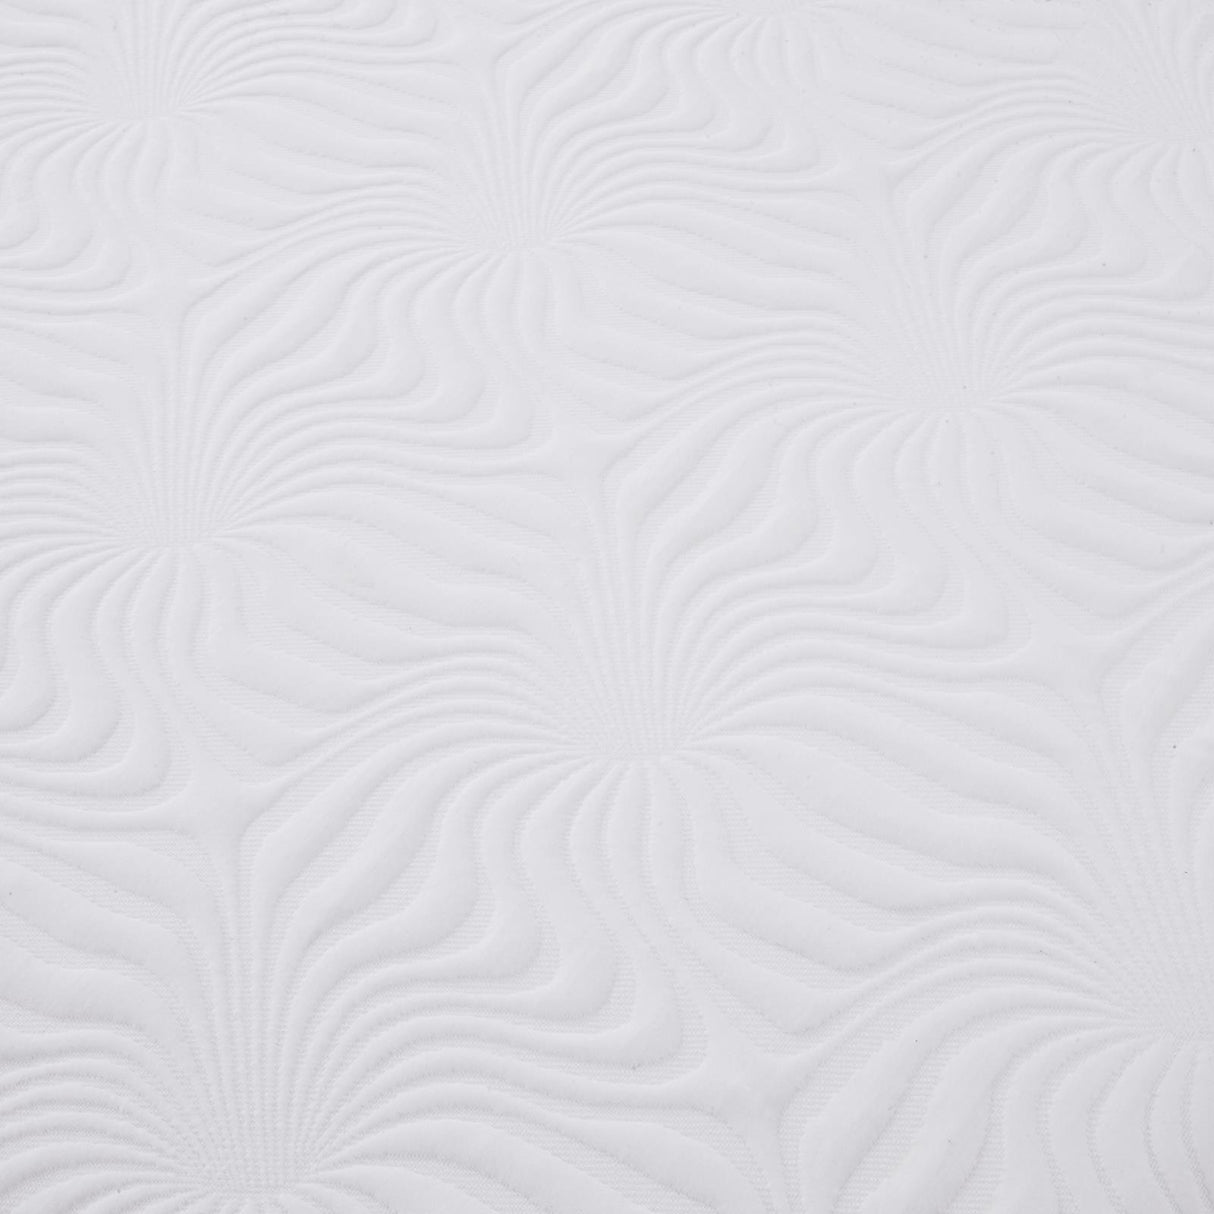 Keegan Twin Long Memory Foam Mattress White - 350063TL - Luna Furniture